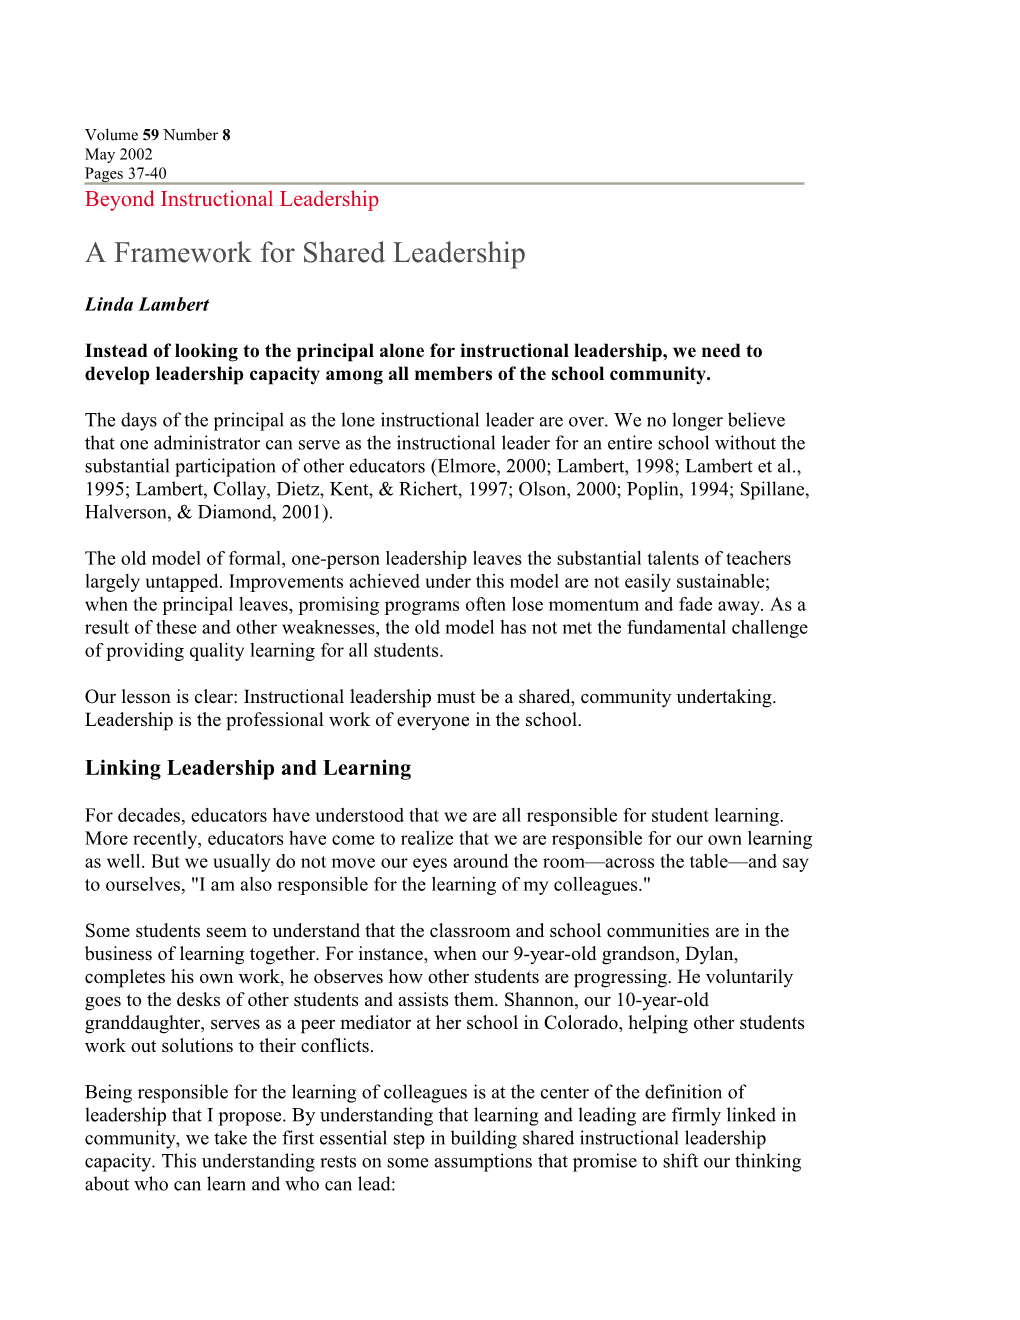 A Framework for Shared Leadership